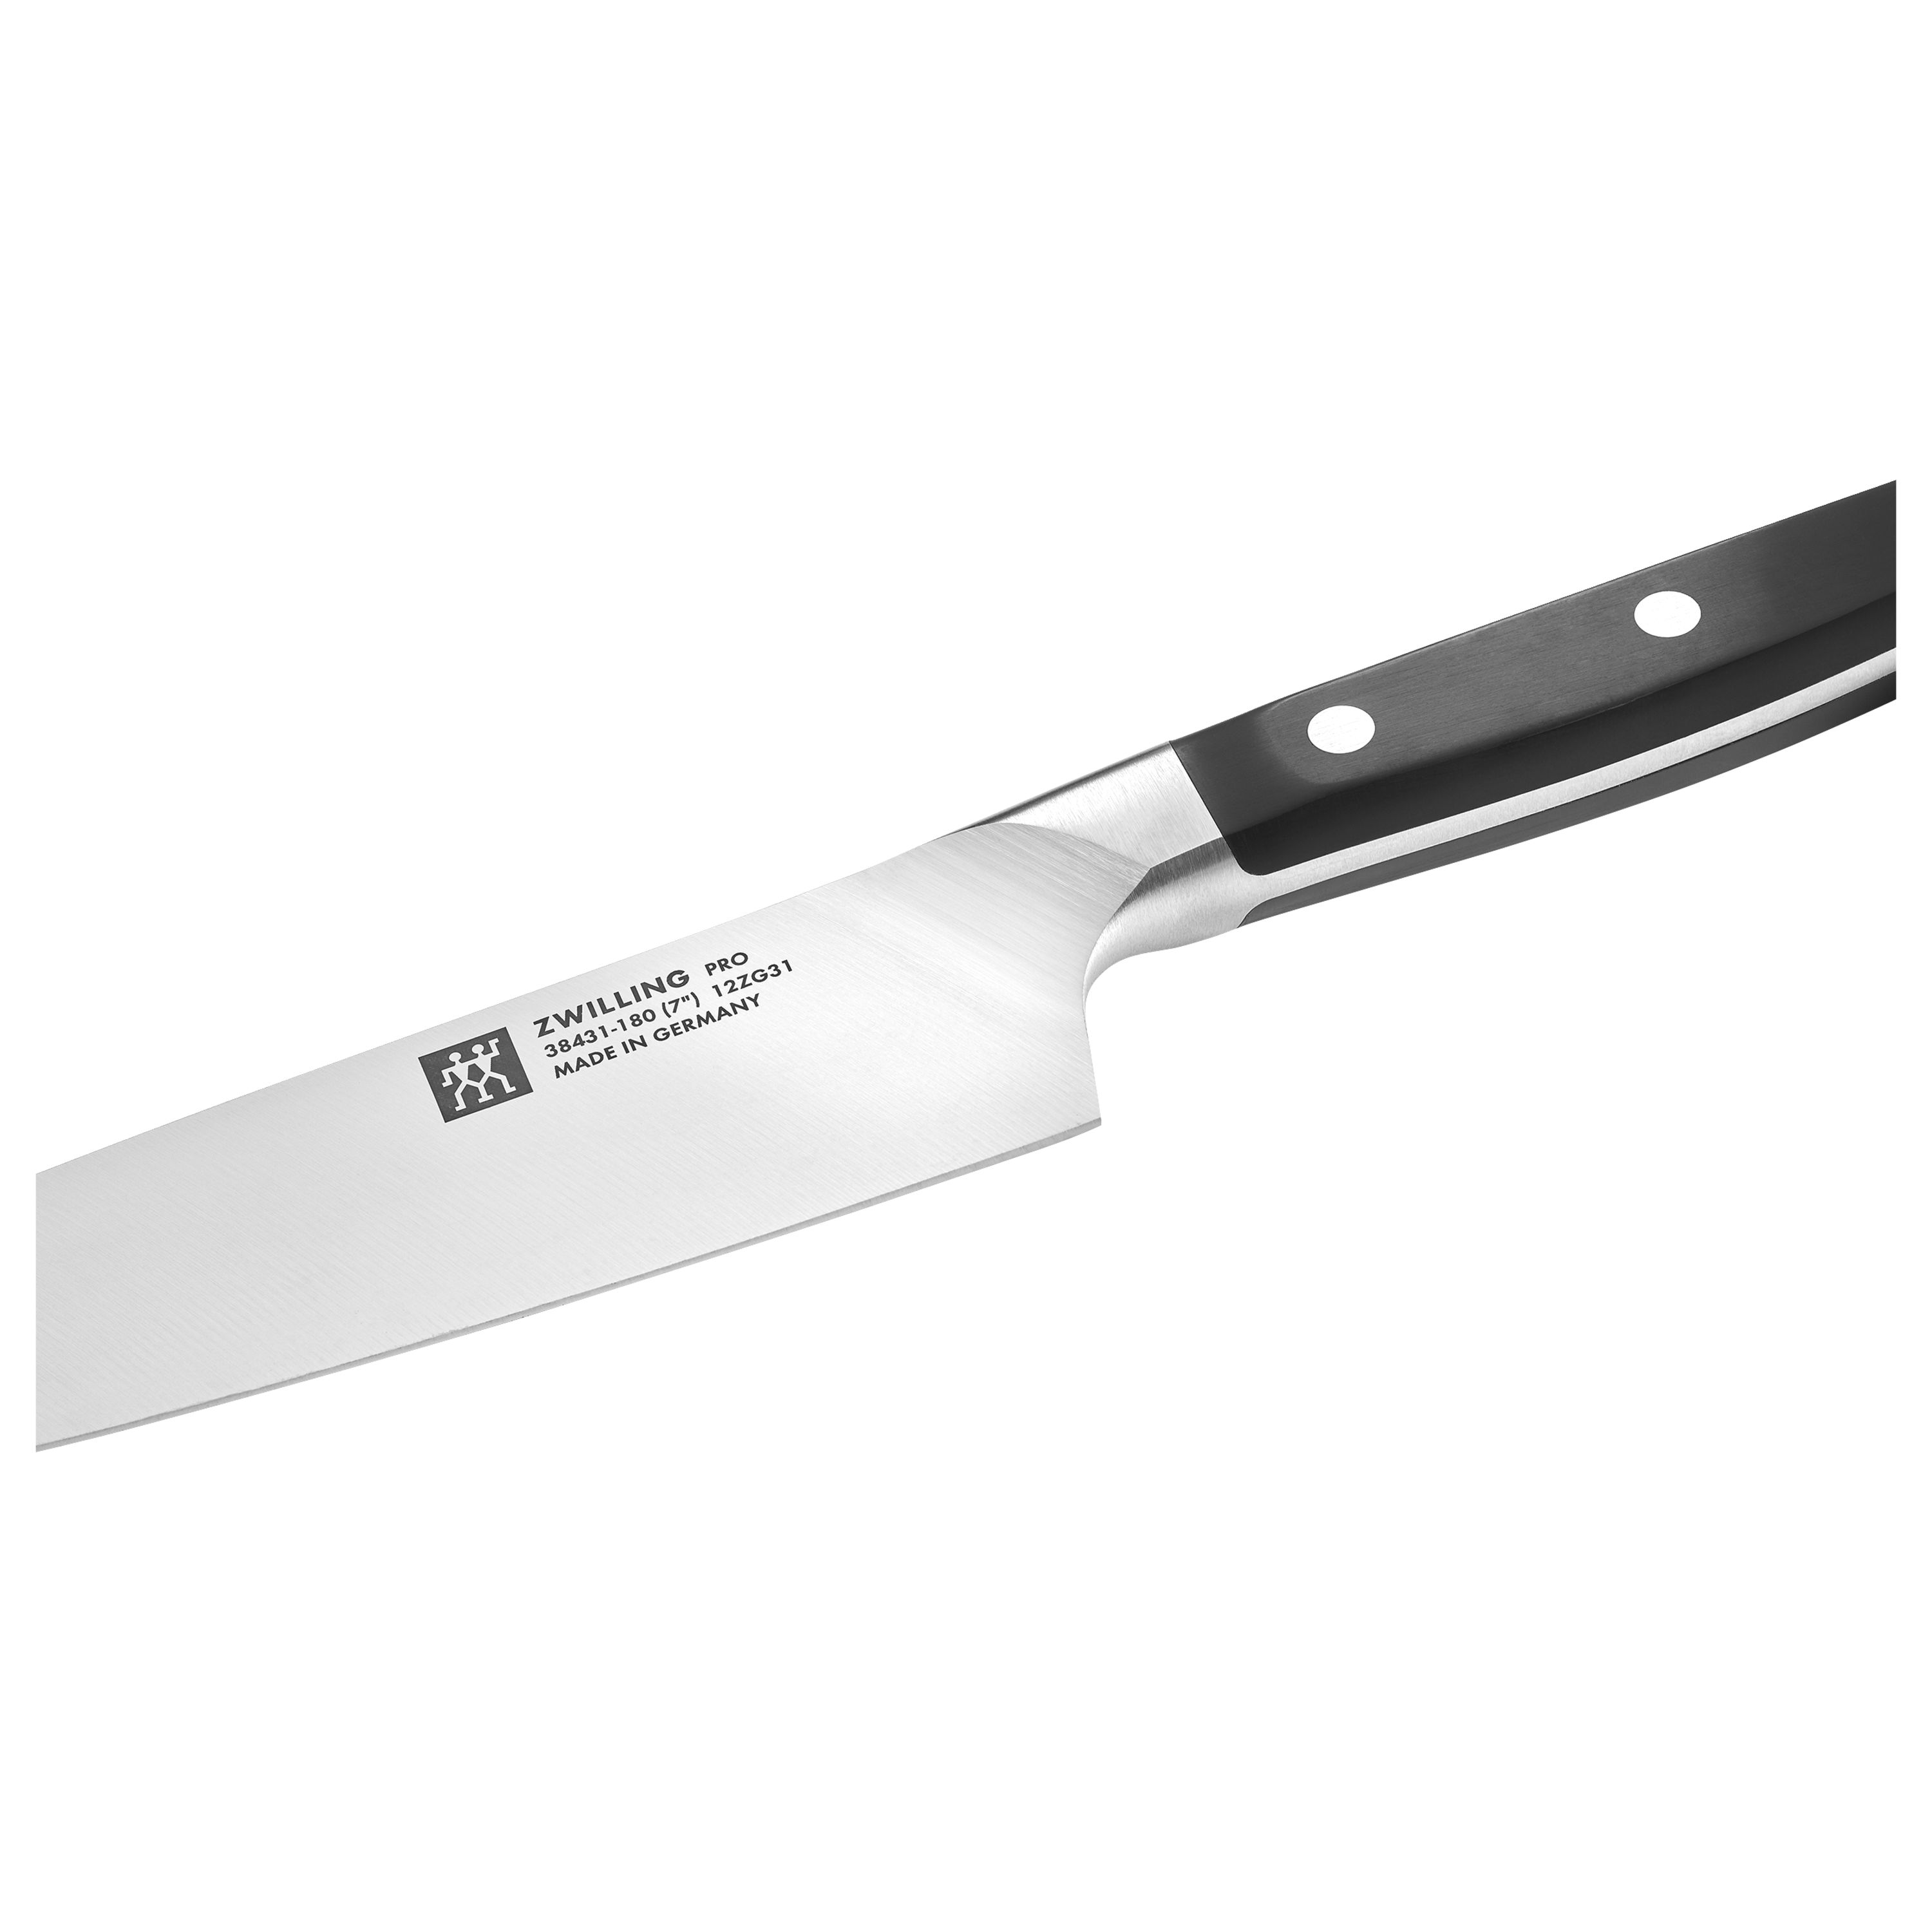 7 Slim Chef's Knife, Zwilling J.A. Henckels